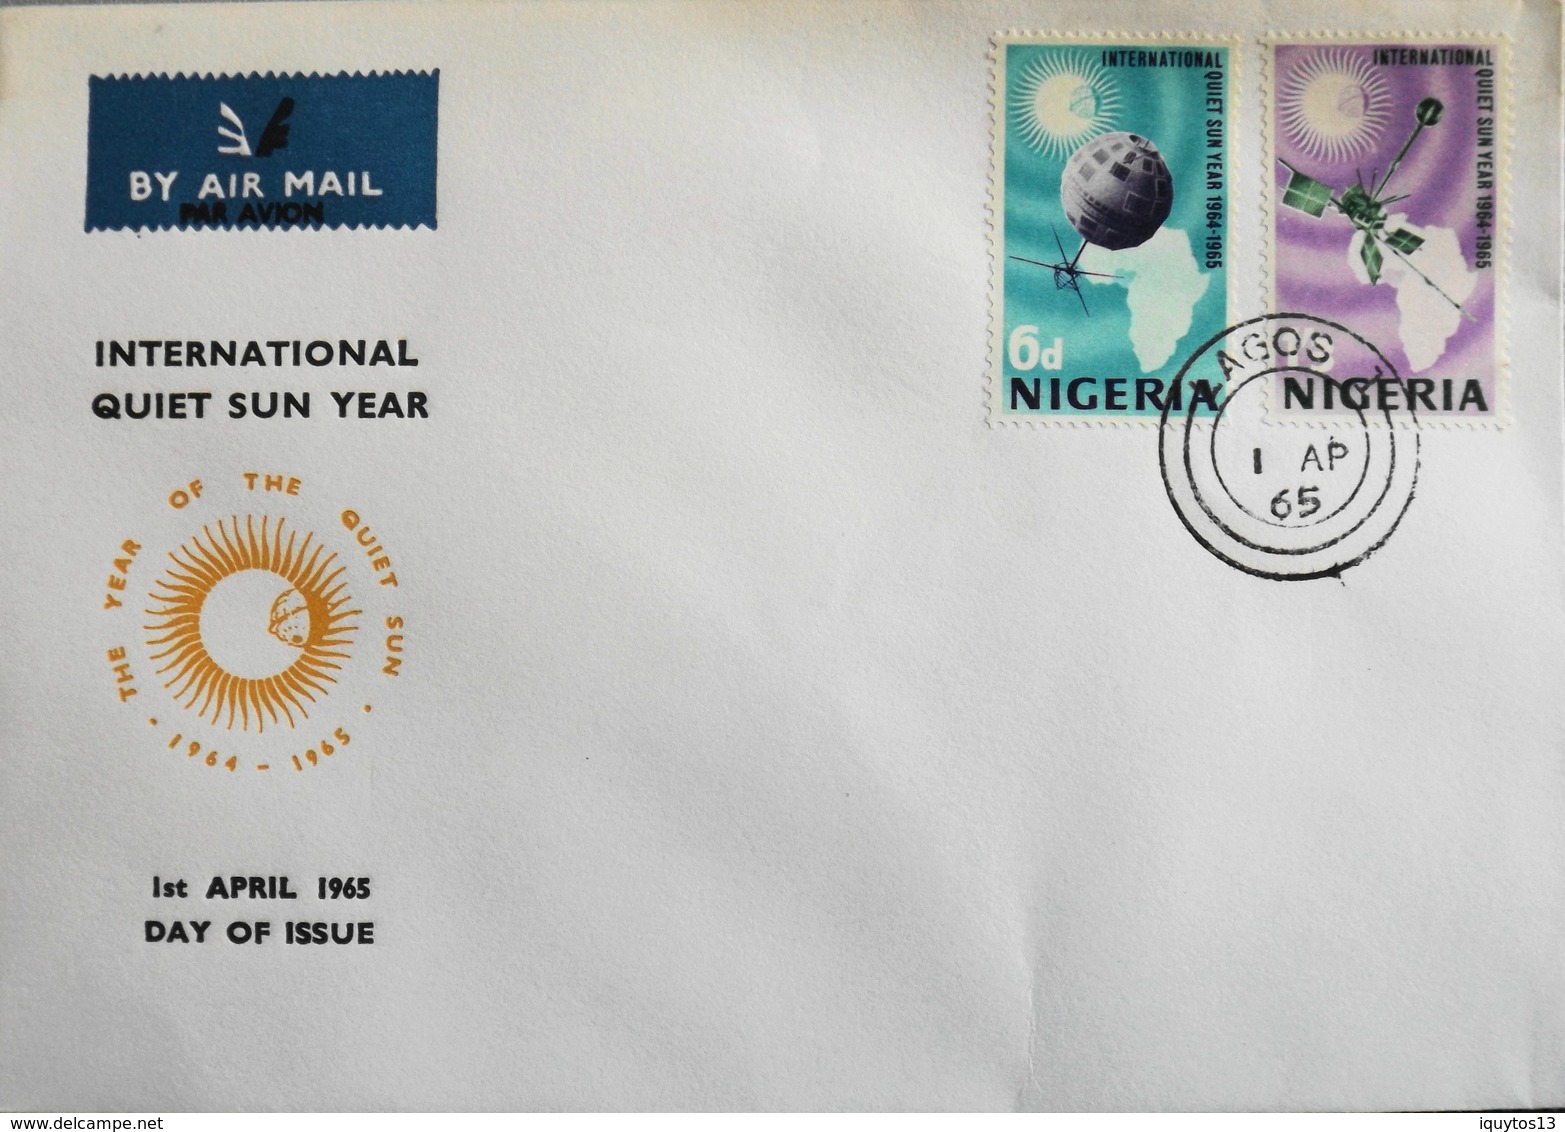 Enveloppe 1er Jour NIGERIA - Année Internationale Du Soleil Tranquille - Daté Lagos 1er Avril 1965 - TBE - Nigeria (1961-...)